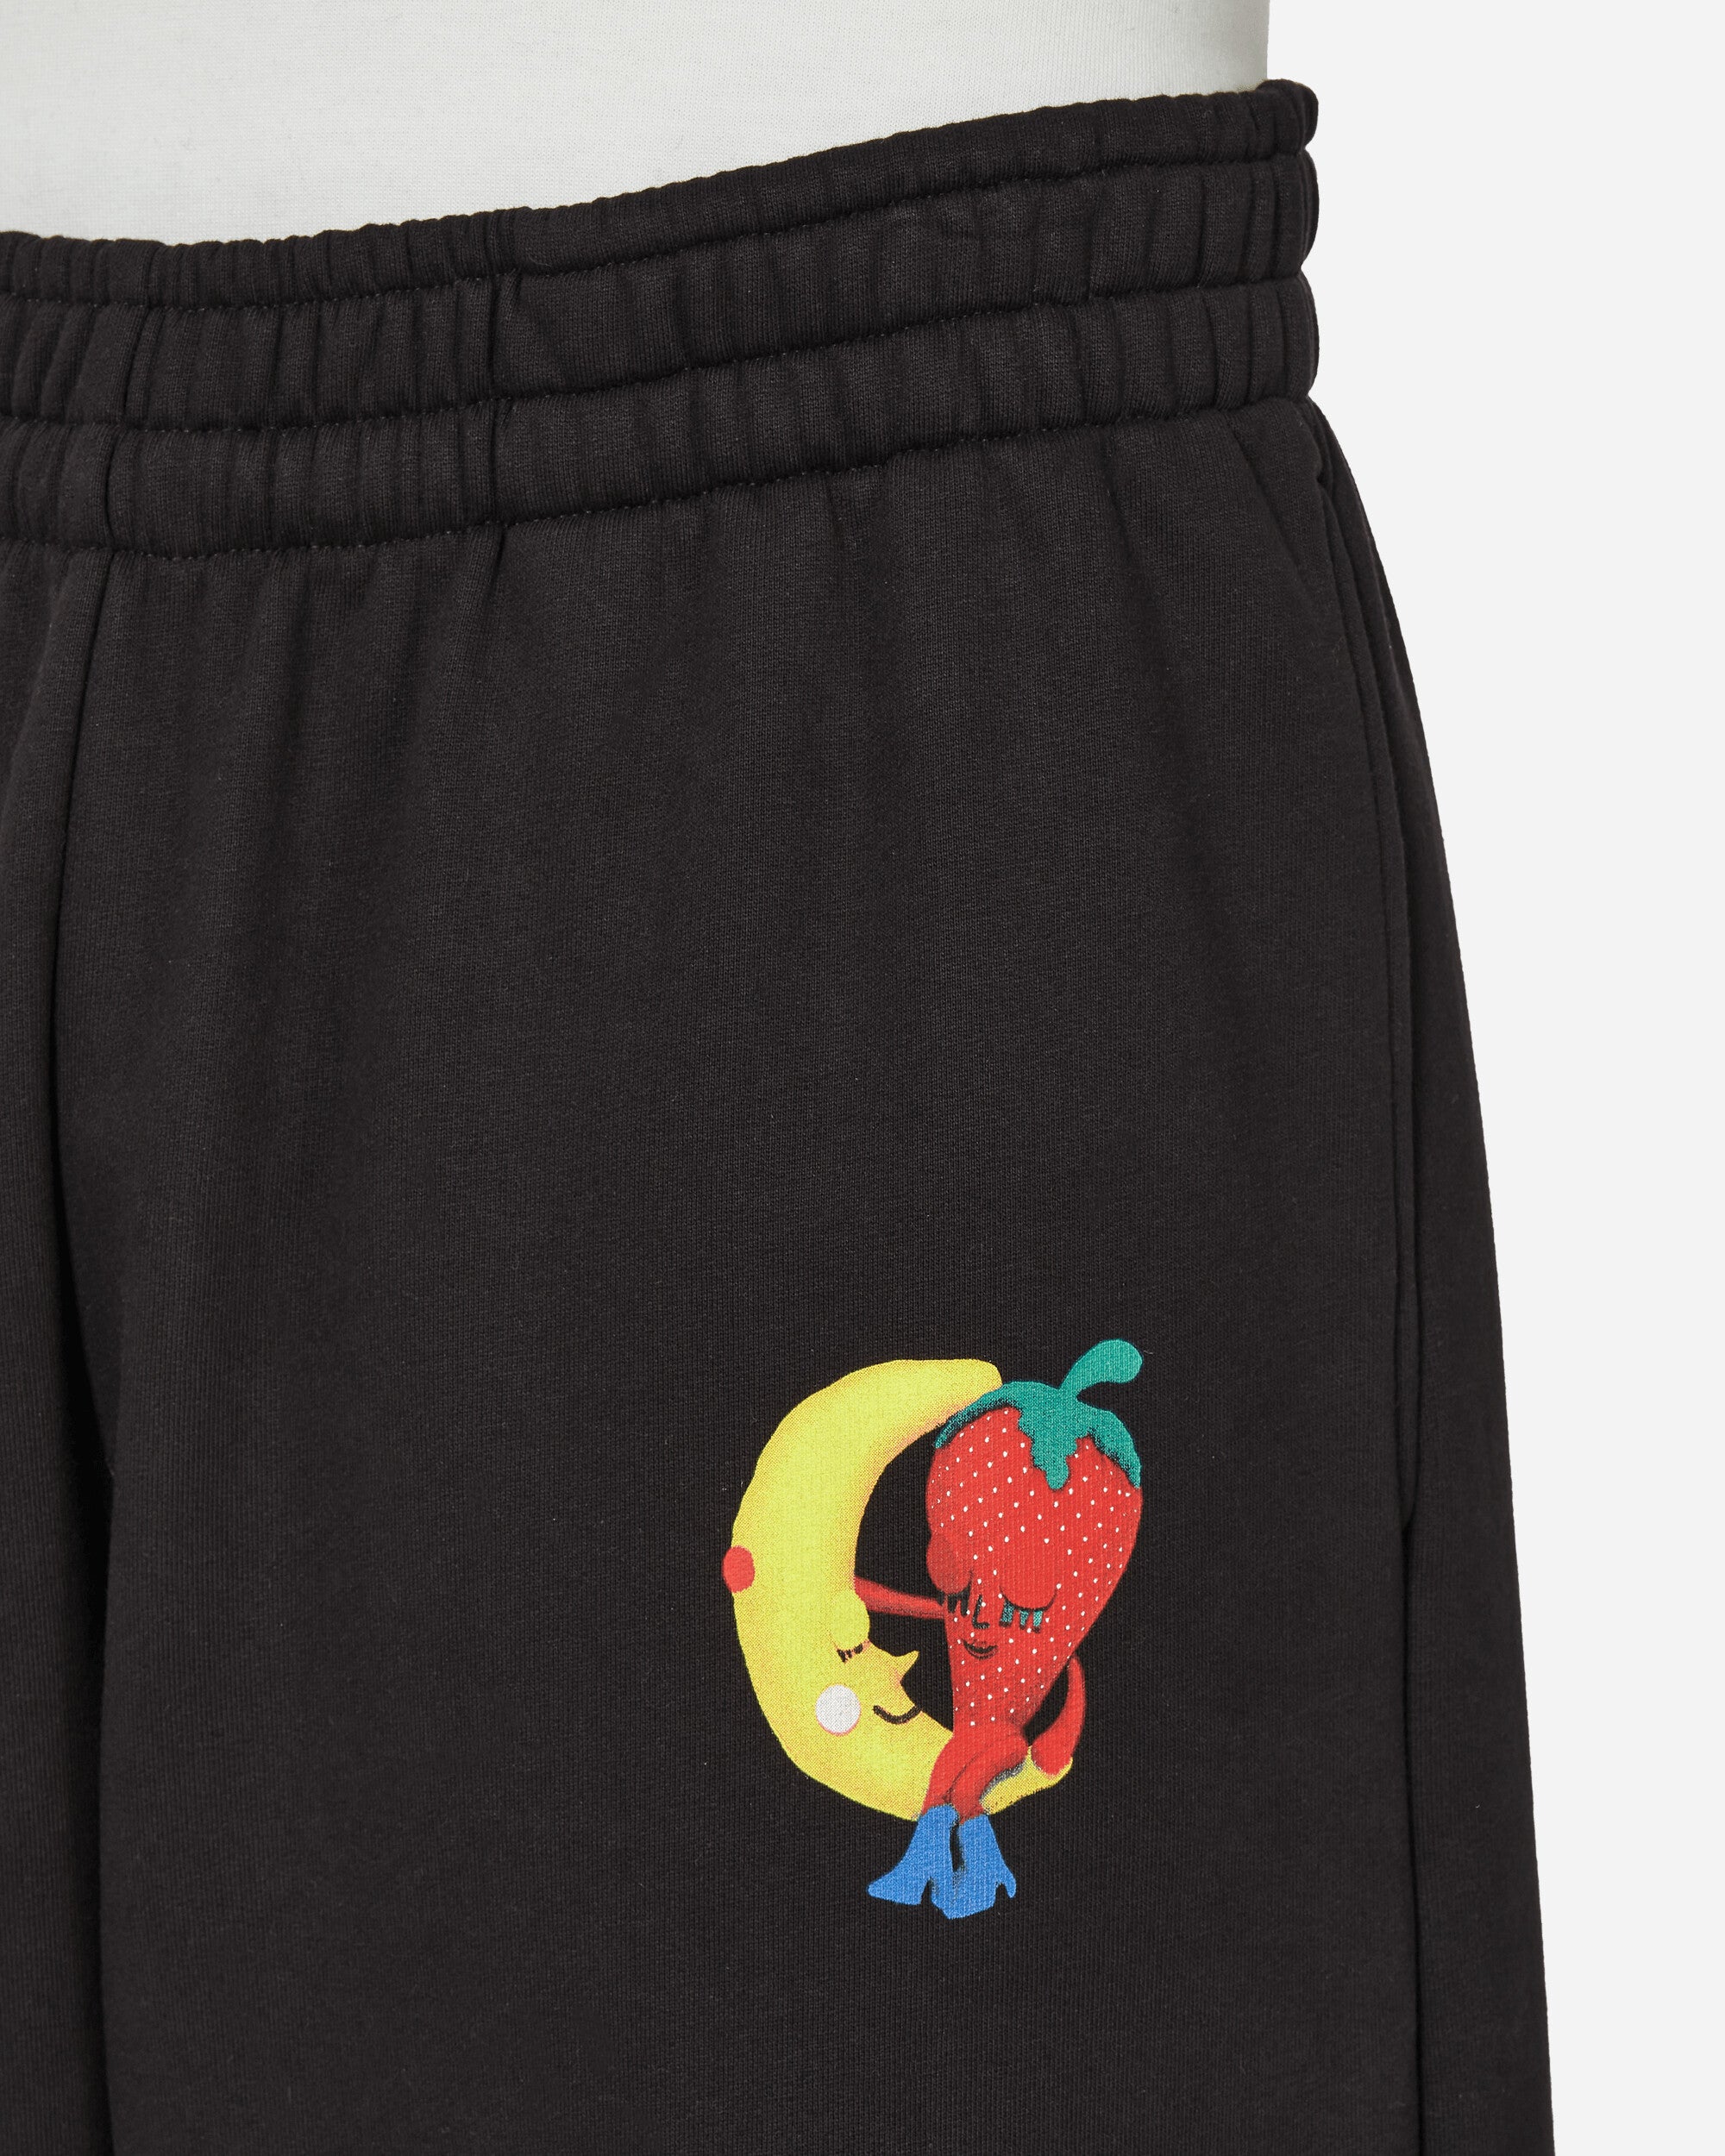 Sky High Farm Perennial Shana Graphic Pants Knit Black Pants Sweatpants SHF04P031  1